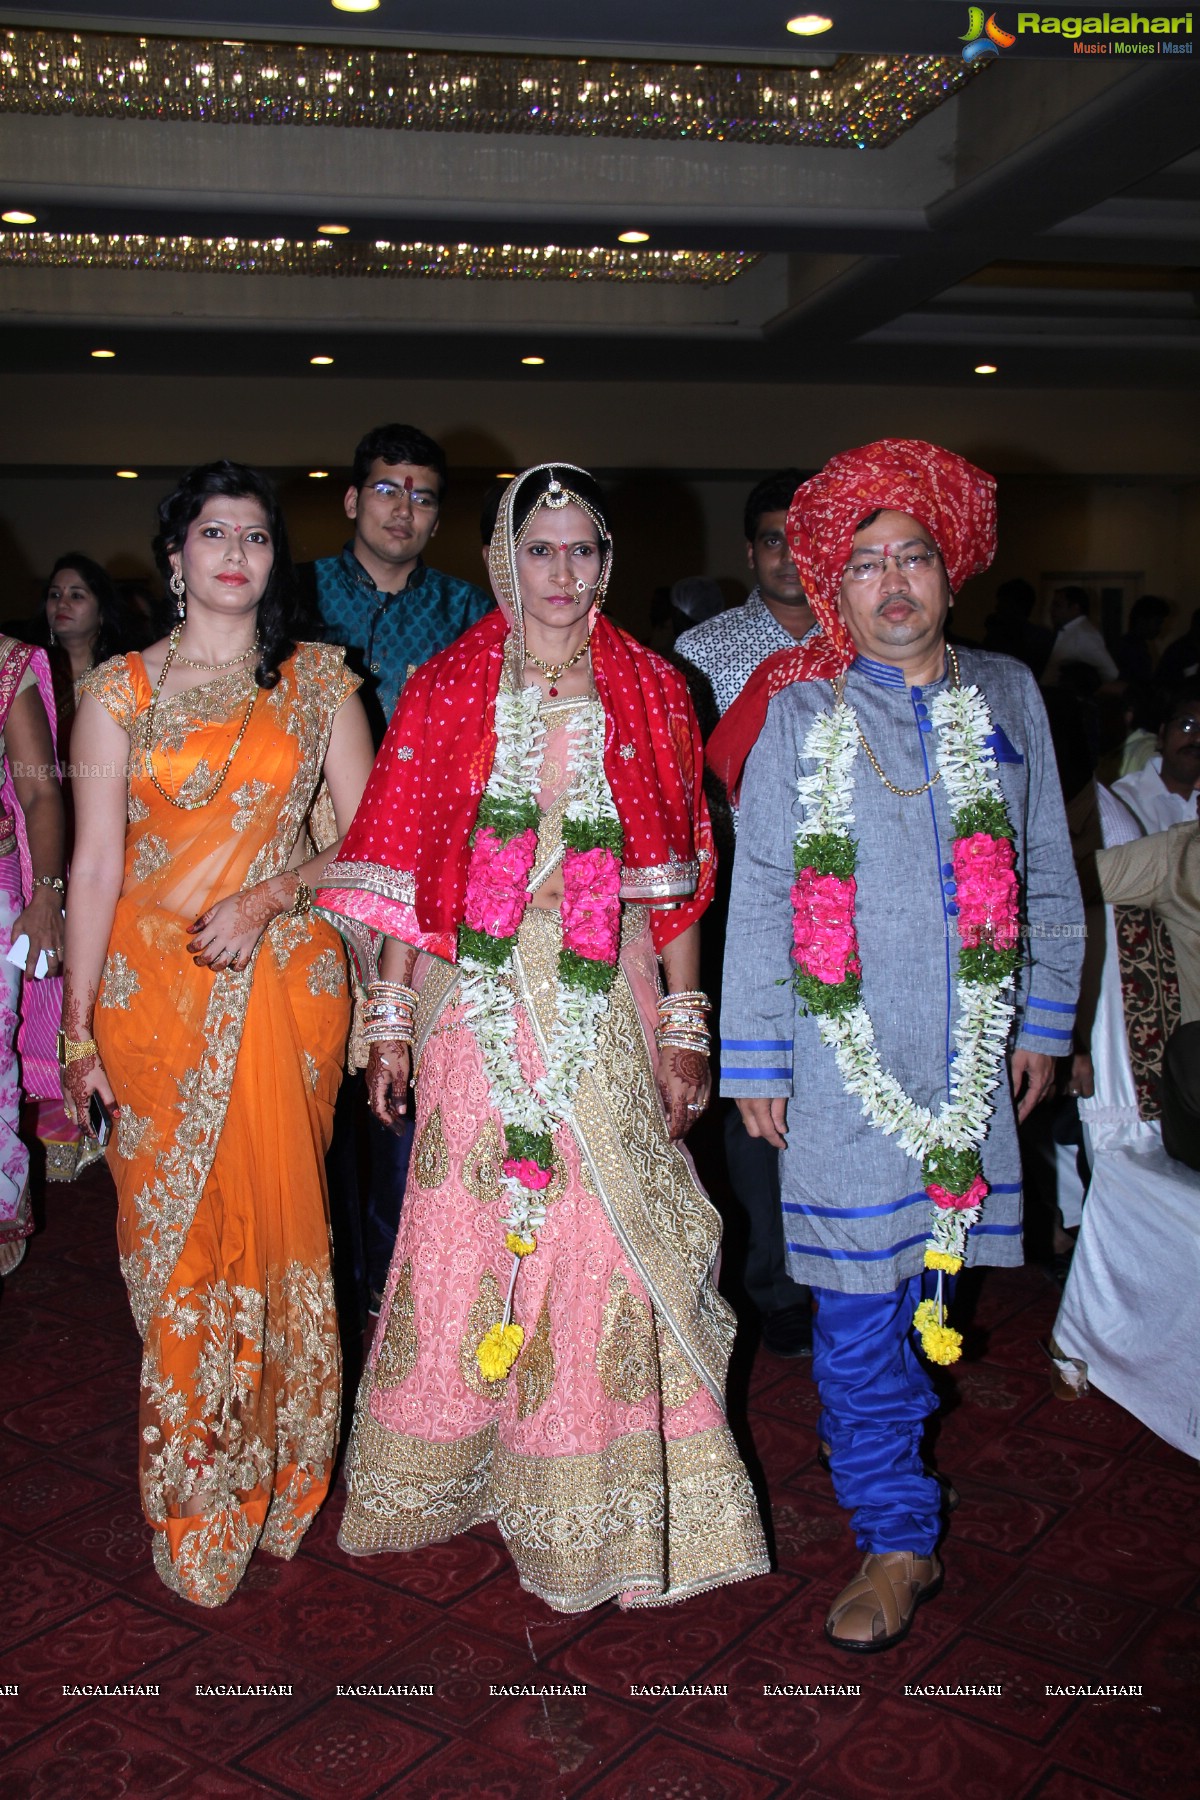 Pre Wedding Bash of Archana Jain - Organised by Renu - B L Bhandari at Dreamland Garden, Balamrai, Hyderabad